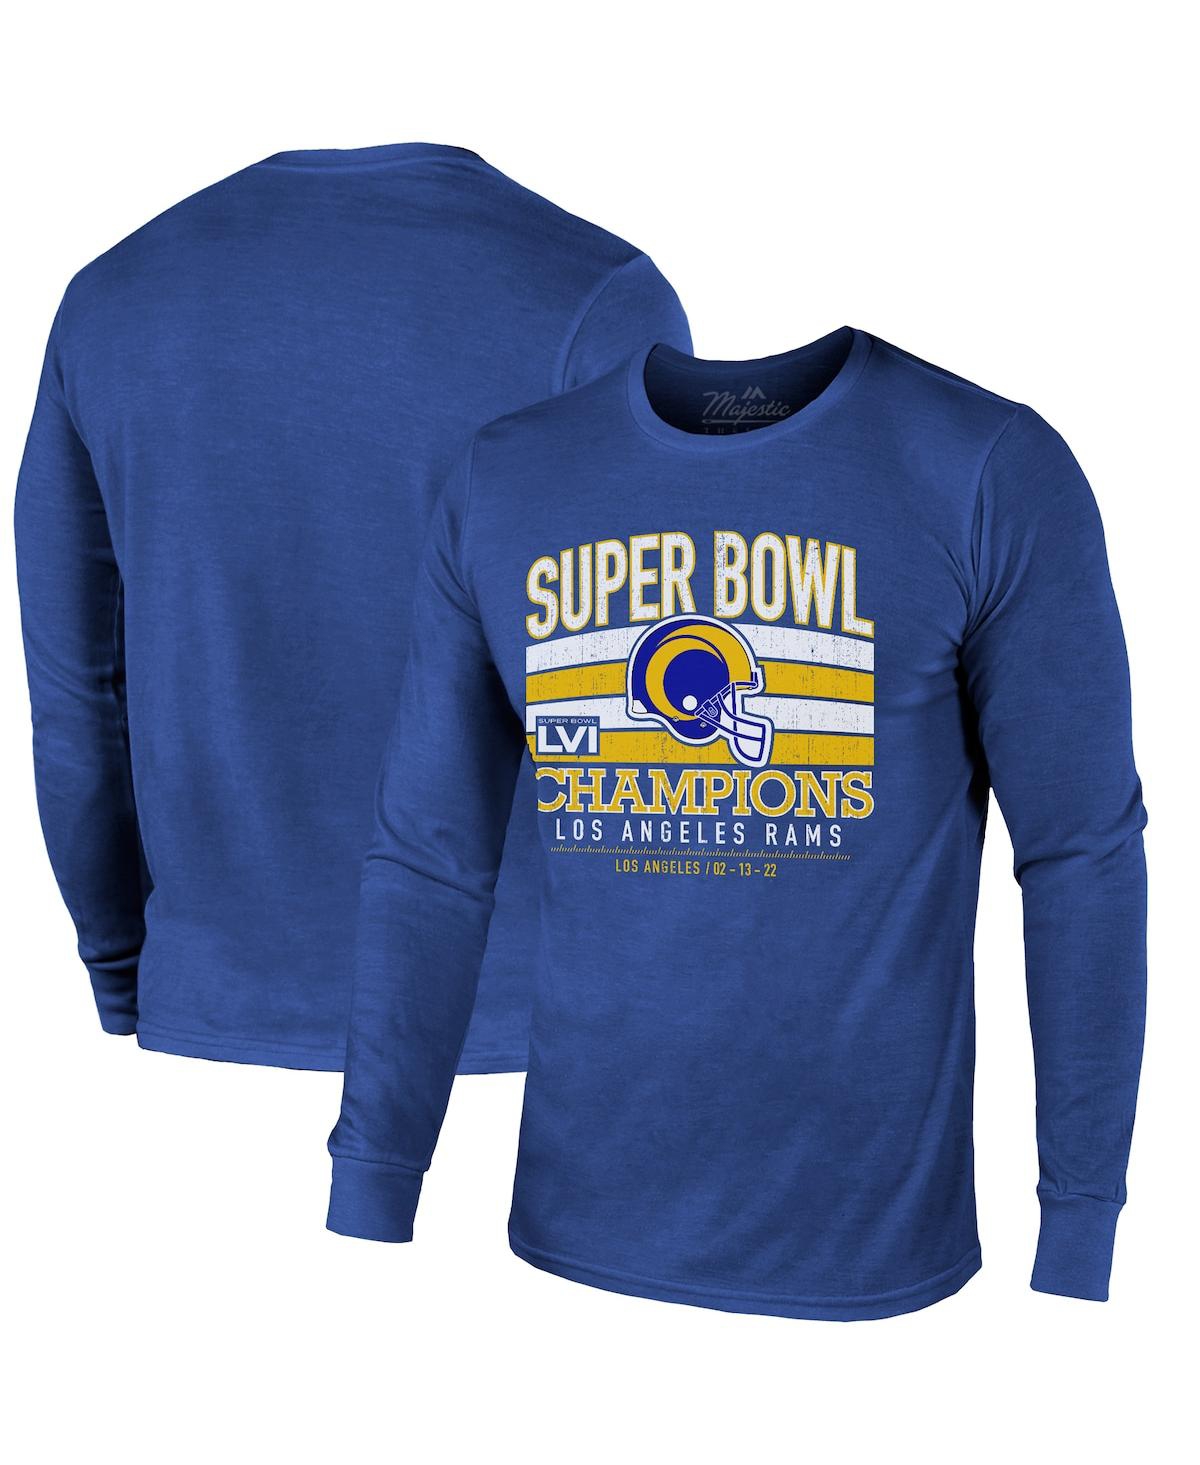 Men's Majestic Threads Royal Los Angeles Rams Super Bowl Lvi Champions Tri-Blend Long Sleeve T-shirt - Royal